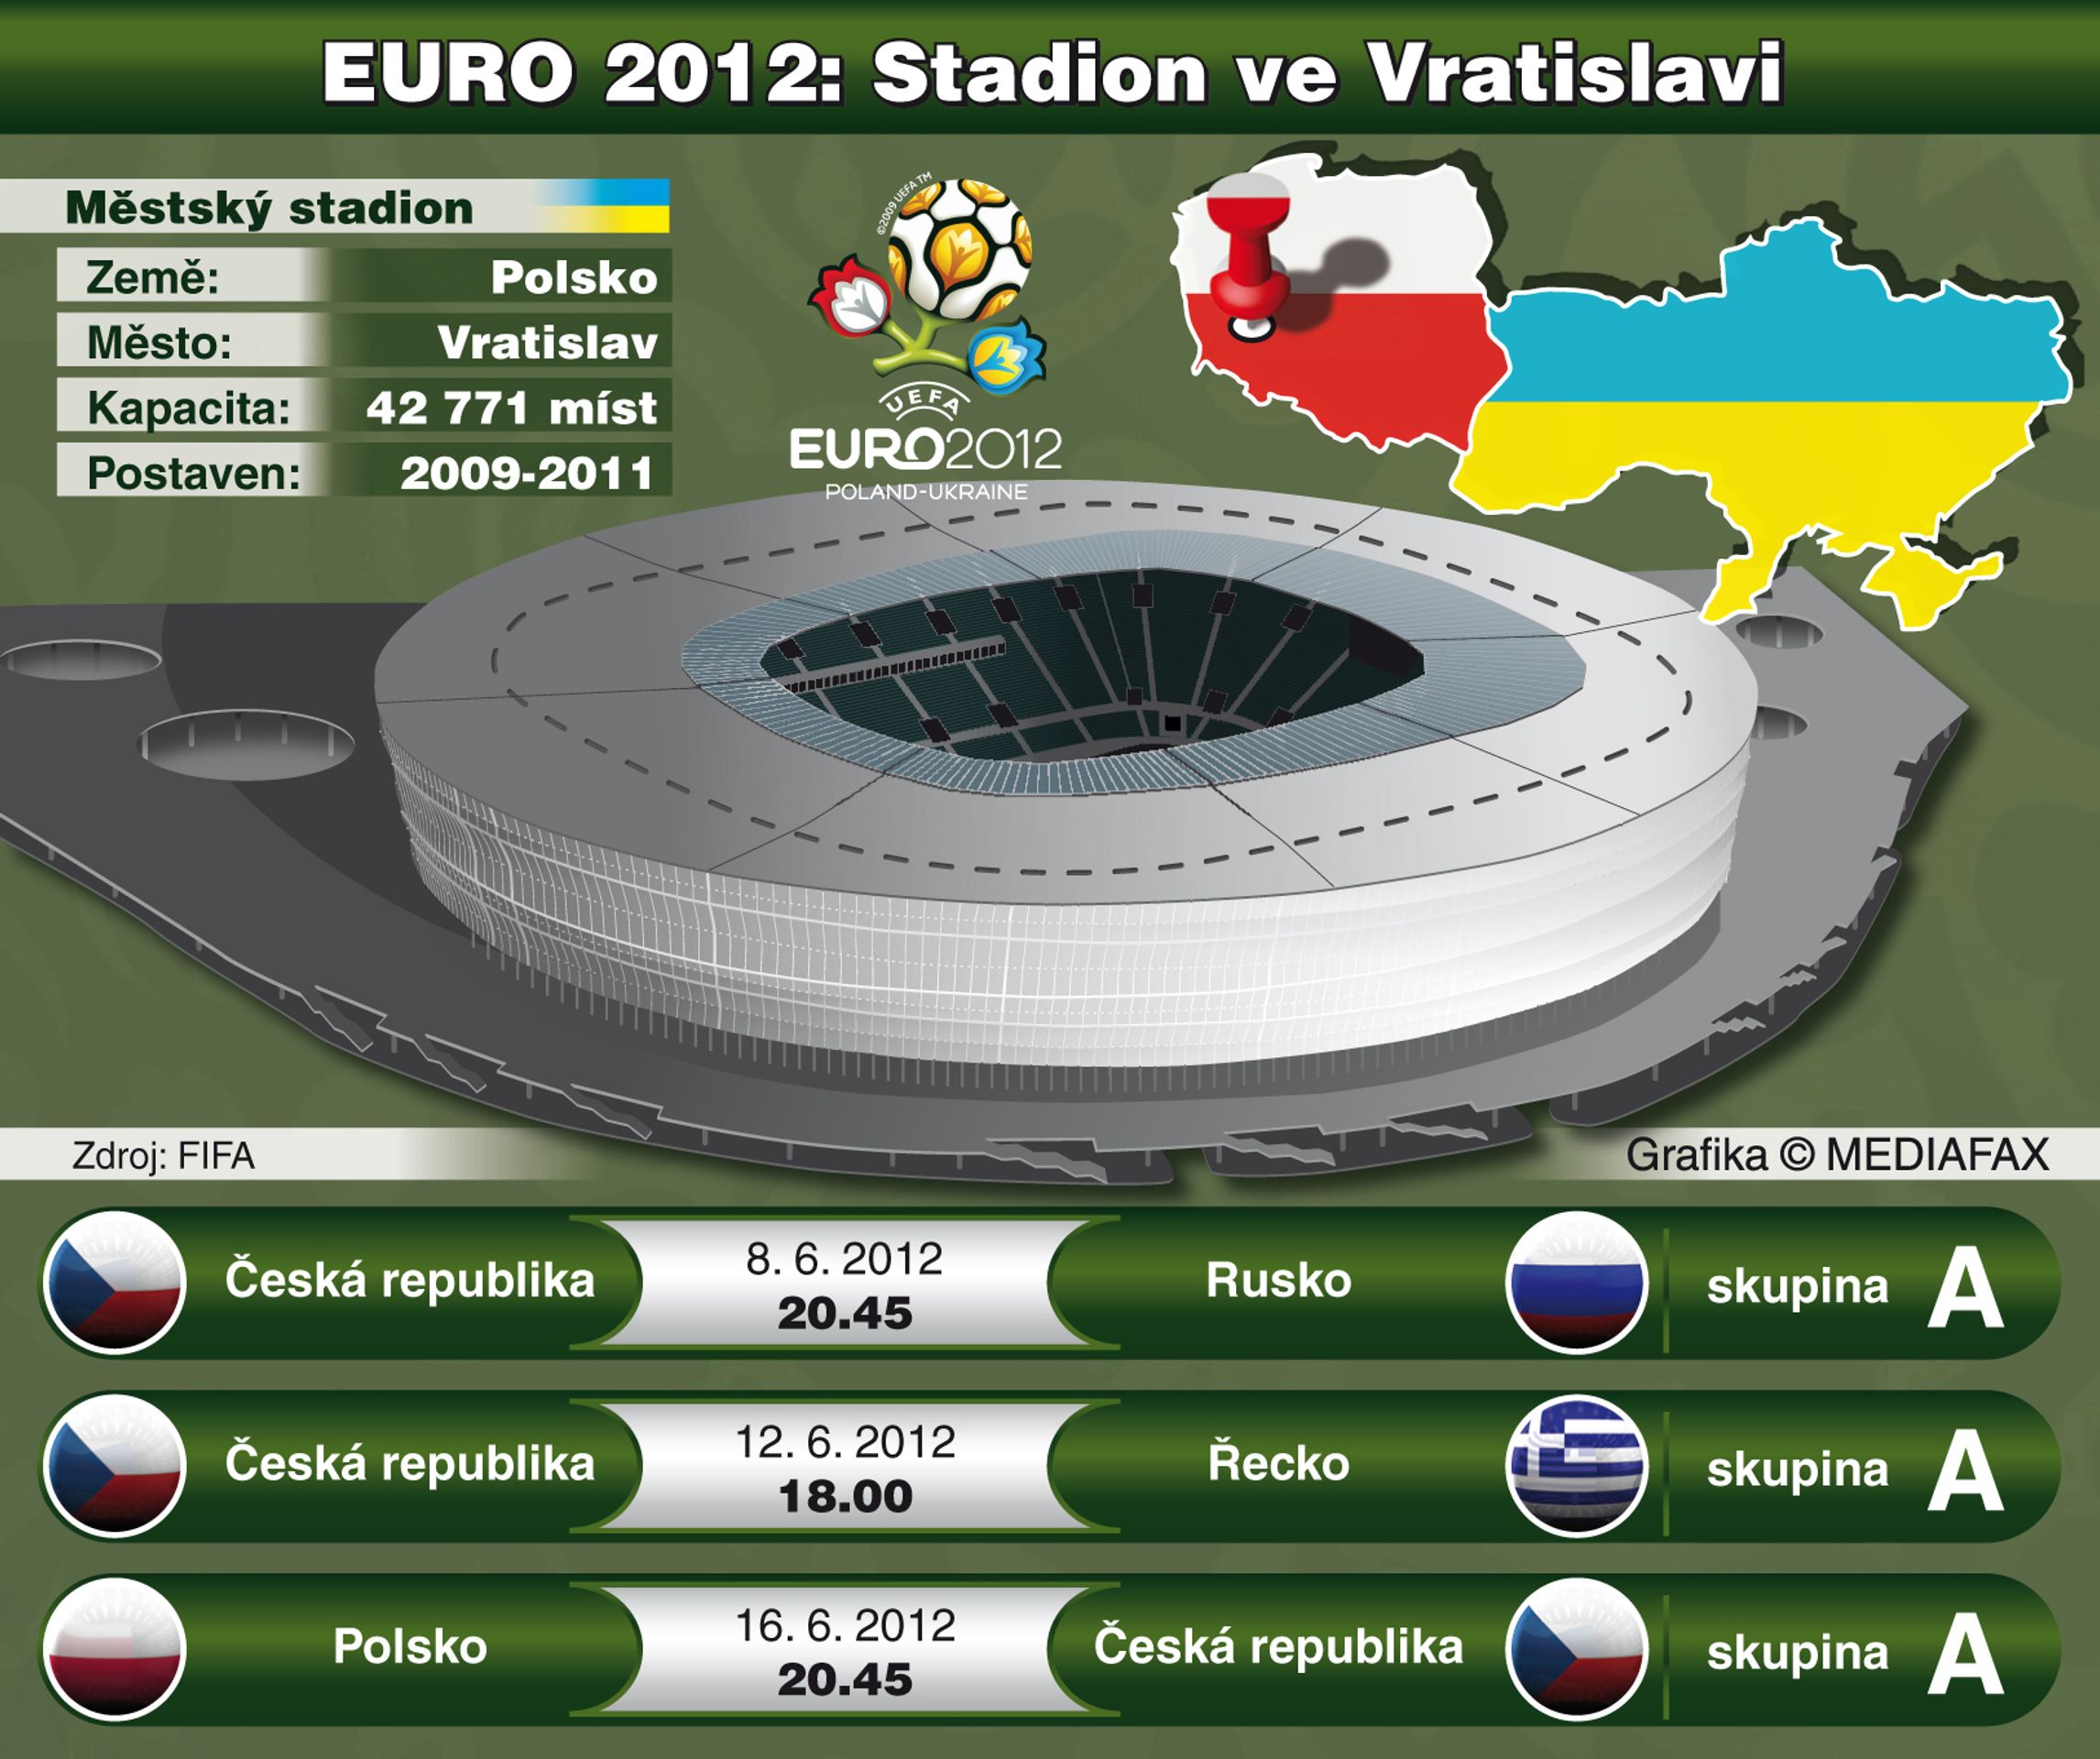 Stadiony pro EURO 2012 - 8 - GALERIE: Stadiony pro fotbalové EURO 2012 (1/8)